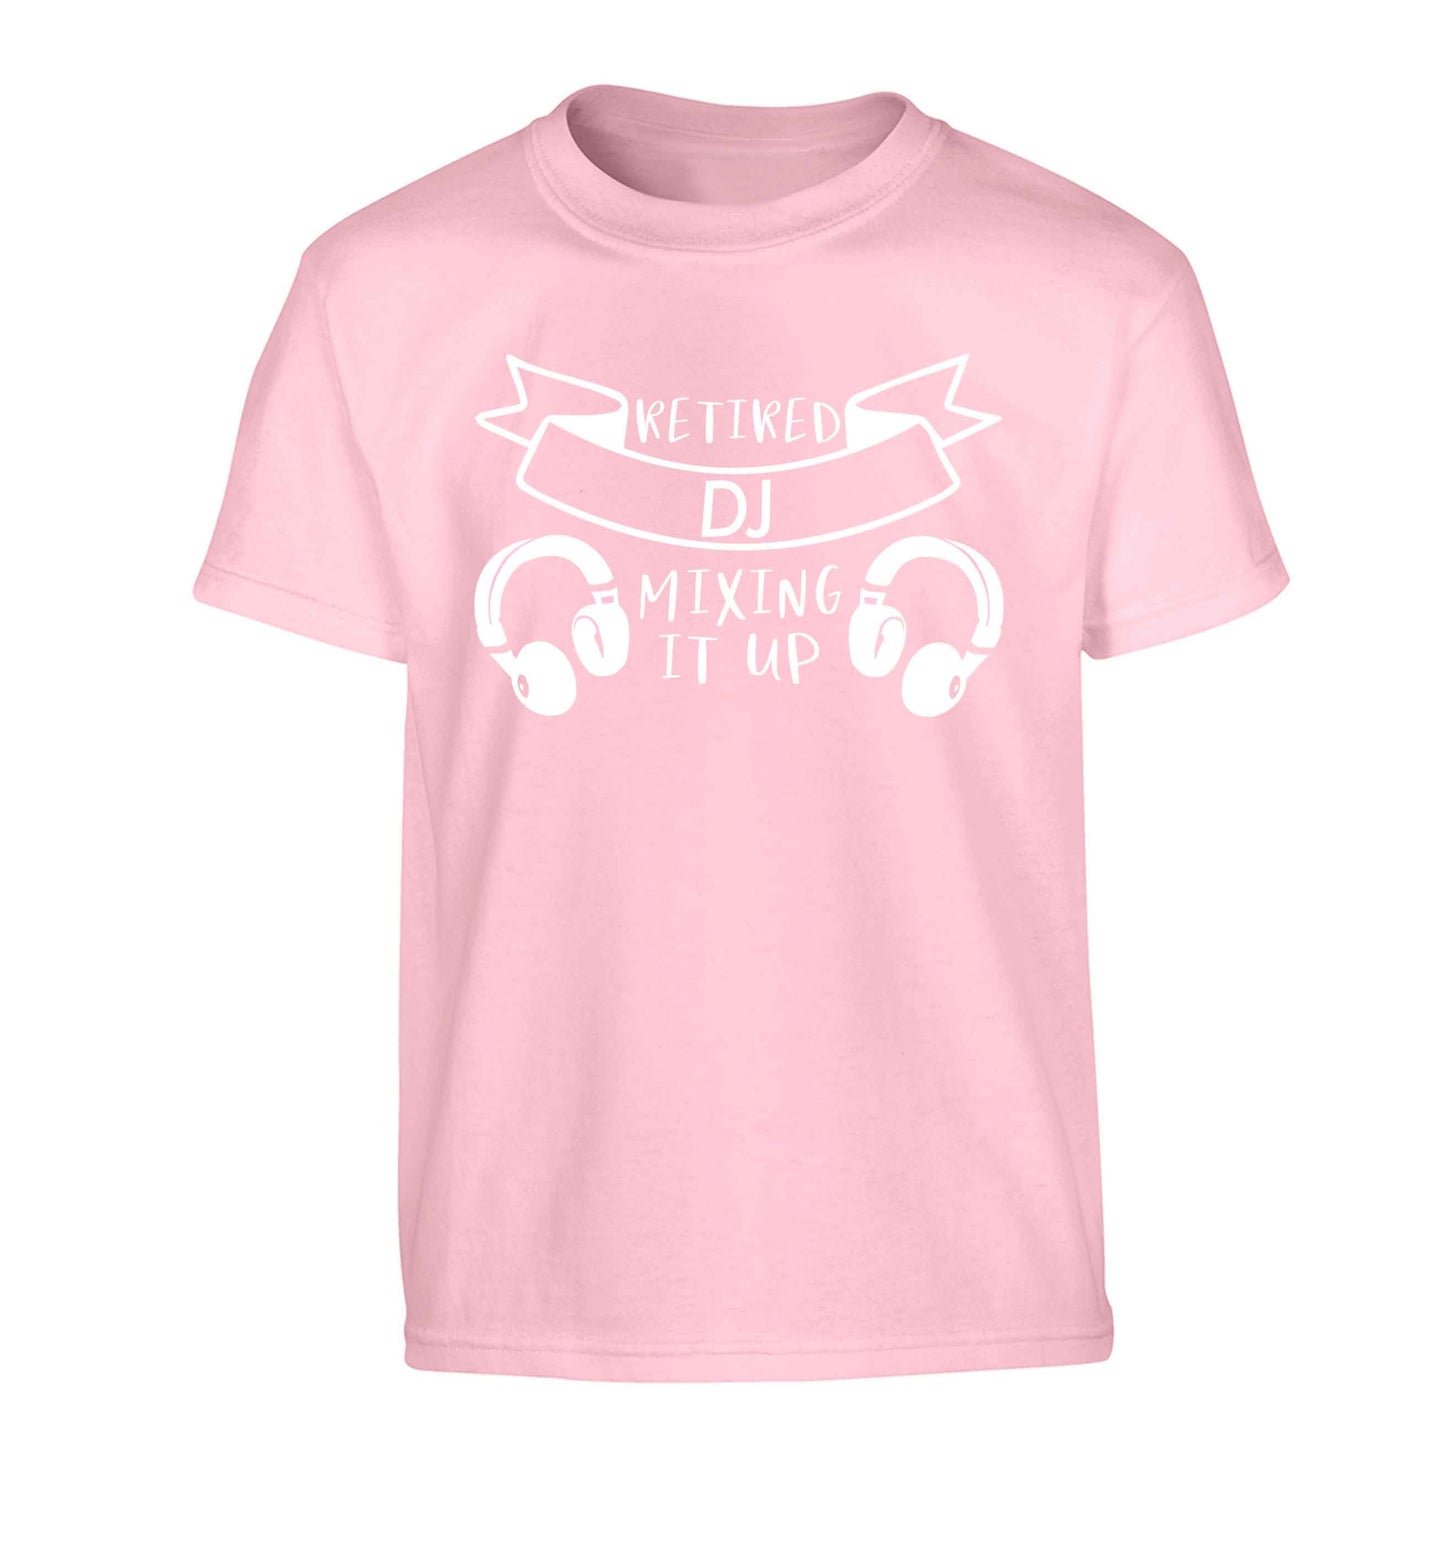 Retired DJ mixing it up Children's light pink Tshirt 12-13 Years